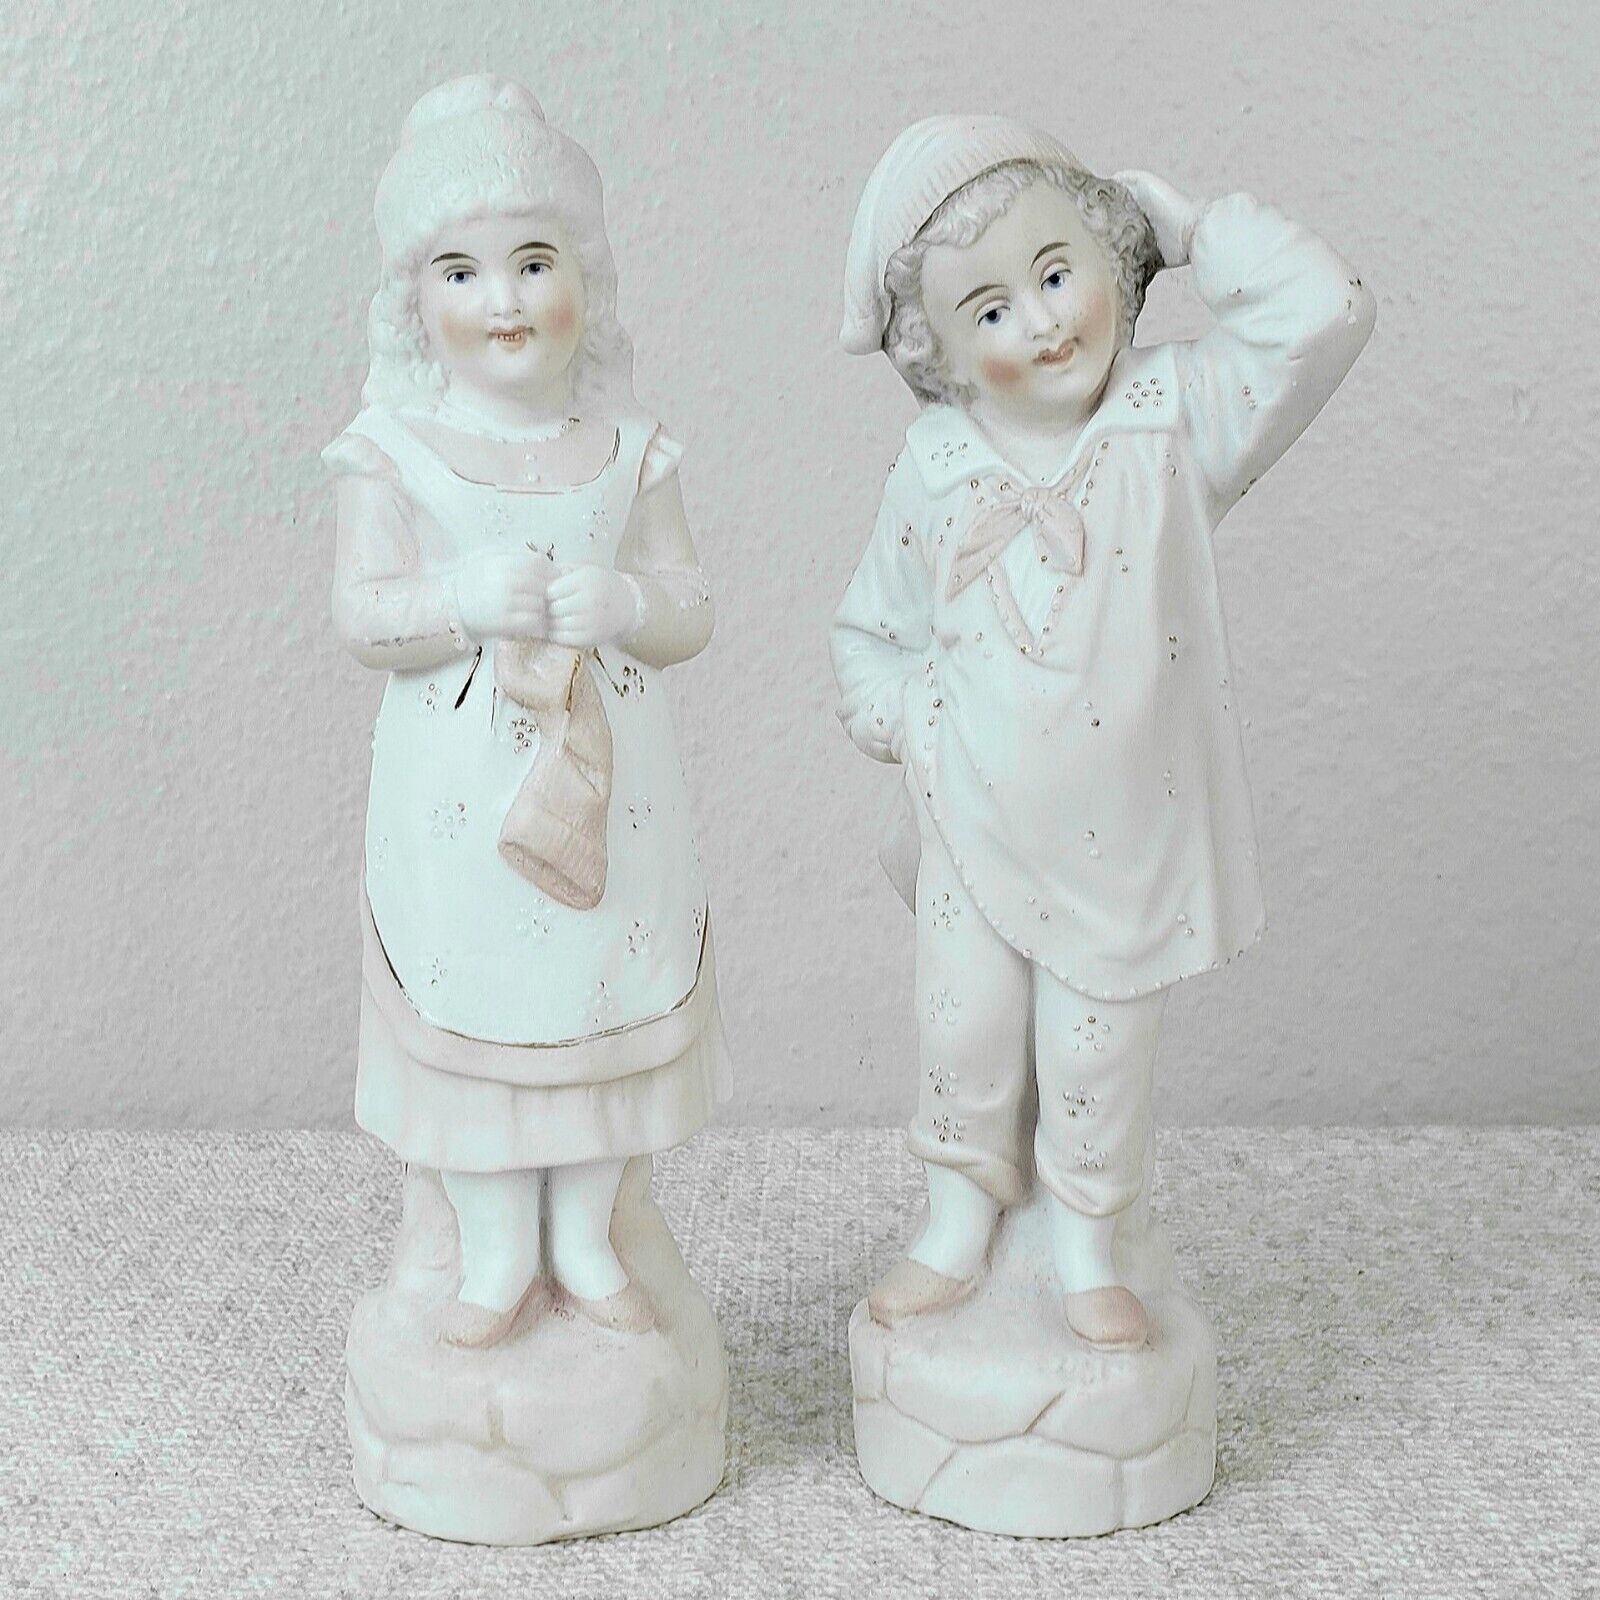 Antique German Porcelain Bisque Figurines Boy Girl Pajamas Gebruder Heubach Pair